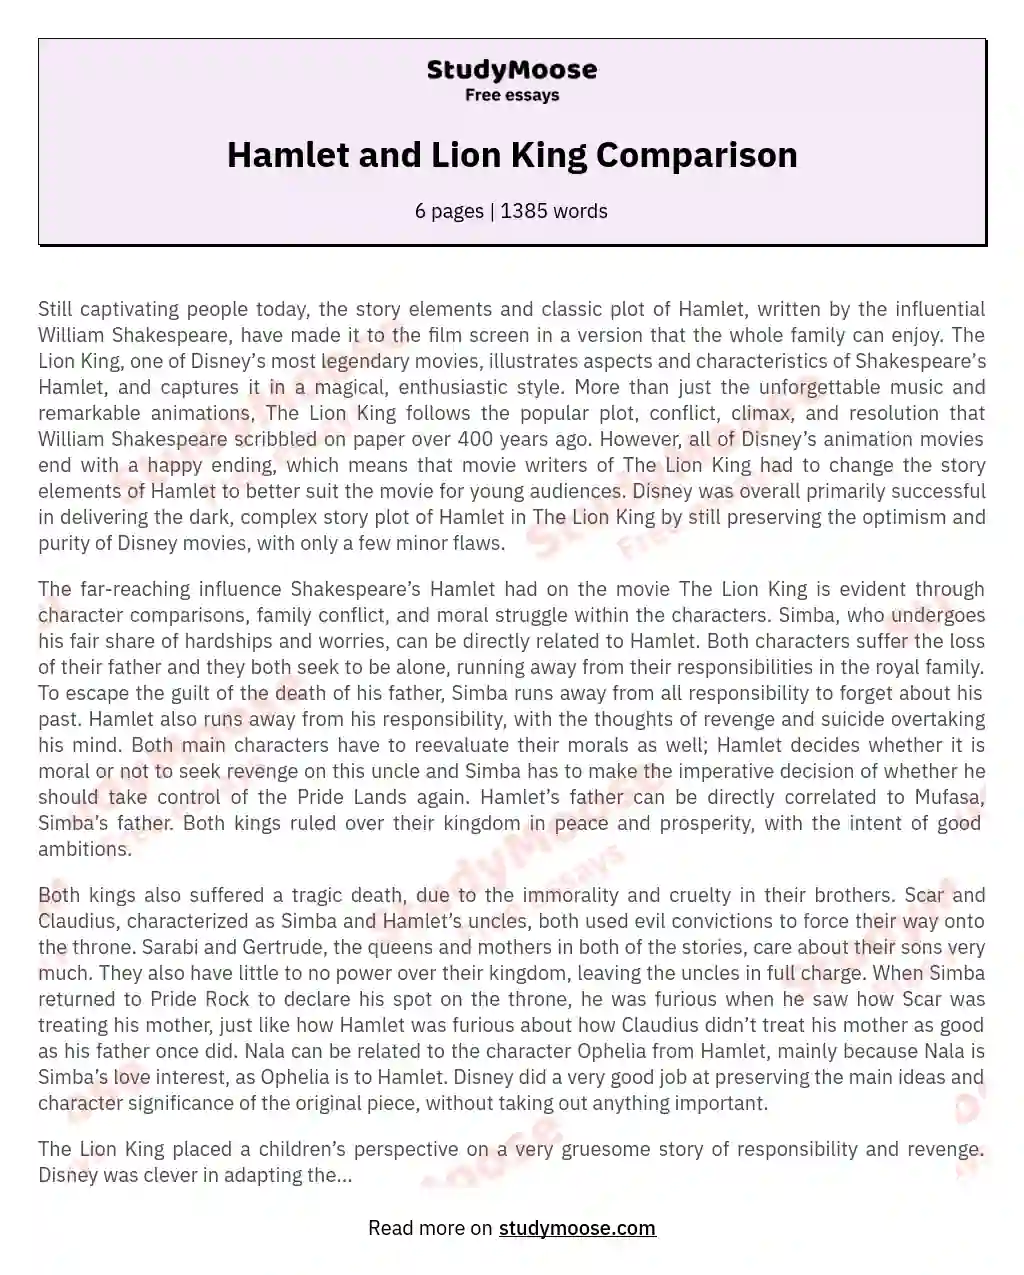 Hamlet and Lion King Comparison essay